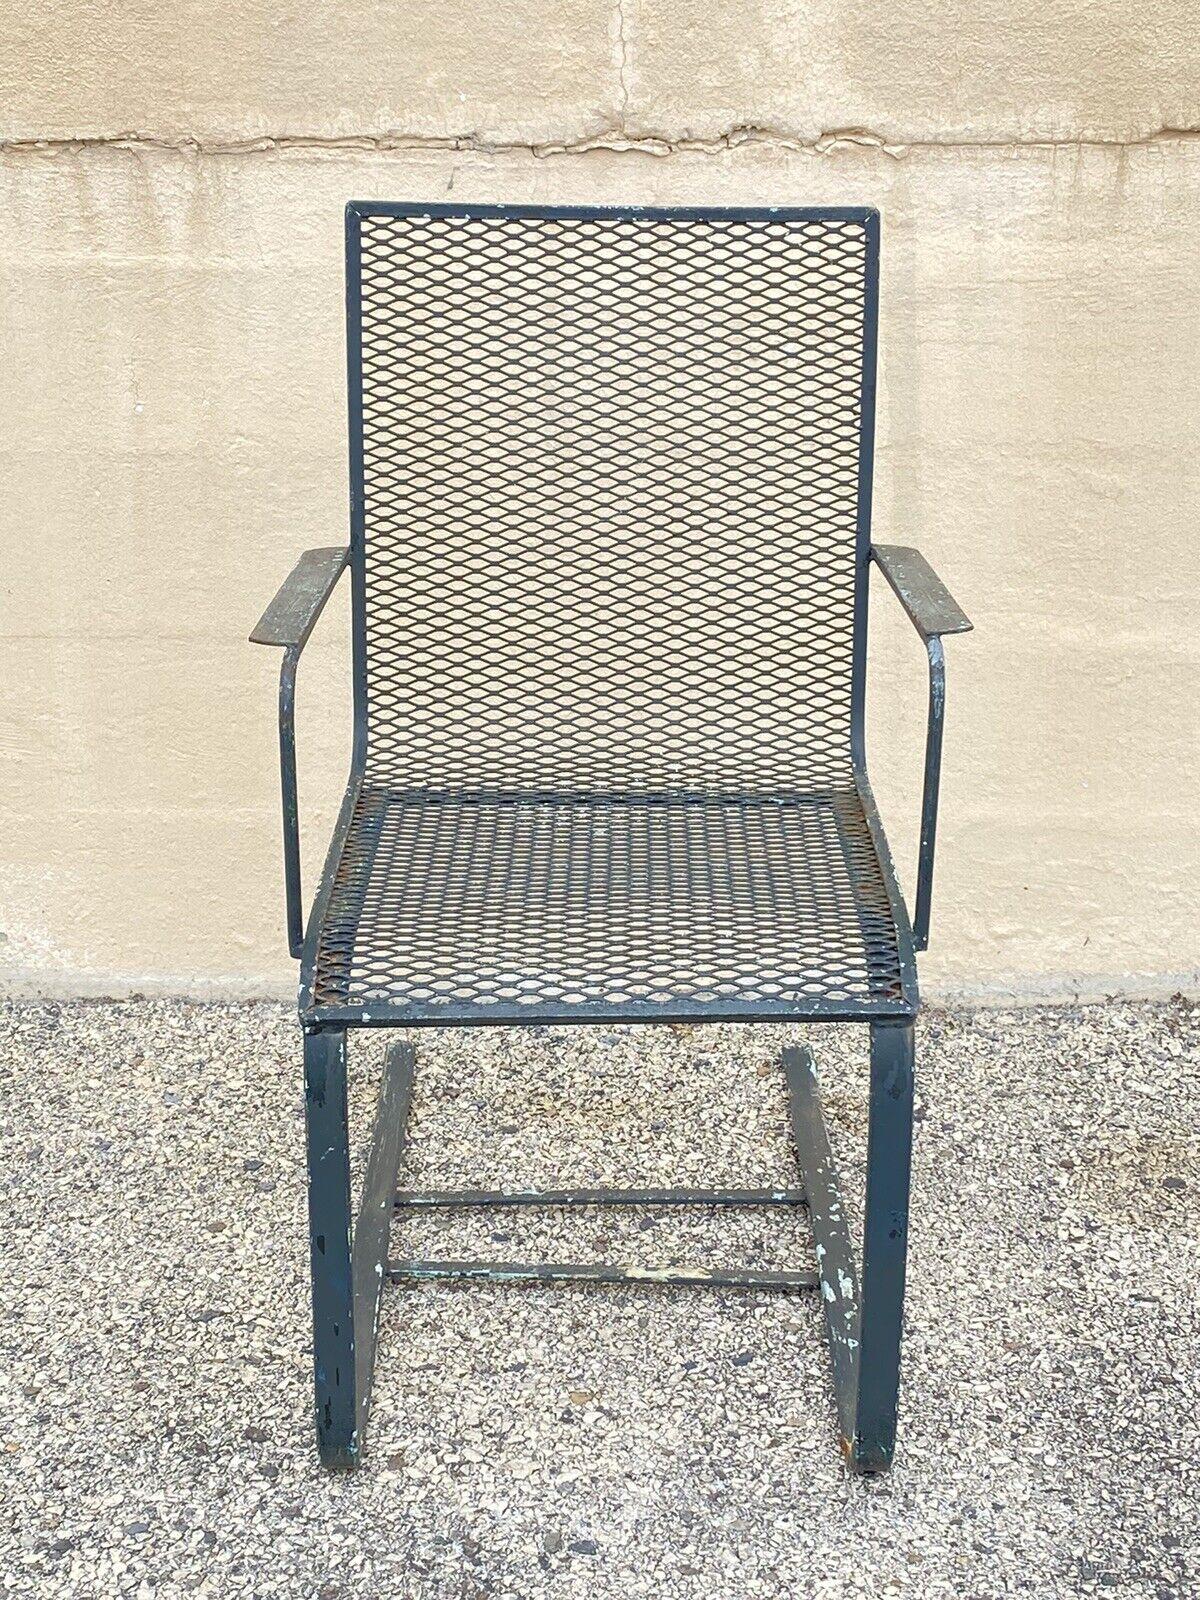 Vintage Industrial Modern Green Wrought Iron Metal Mesh Cantilever Garden Patio Chair. Circa Mid 20th Century. Measurements: 35.5